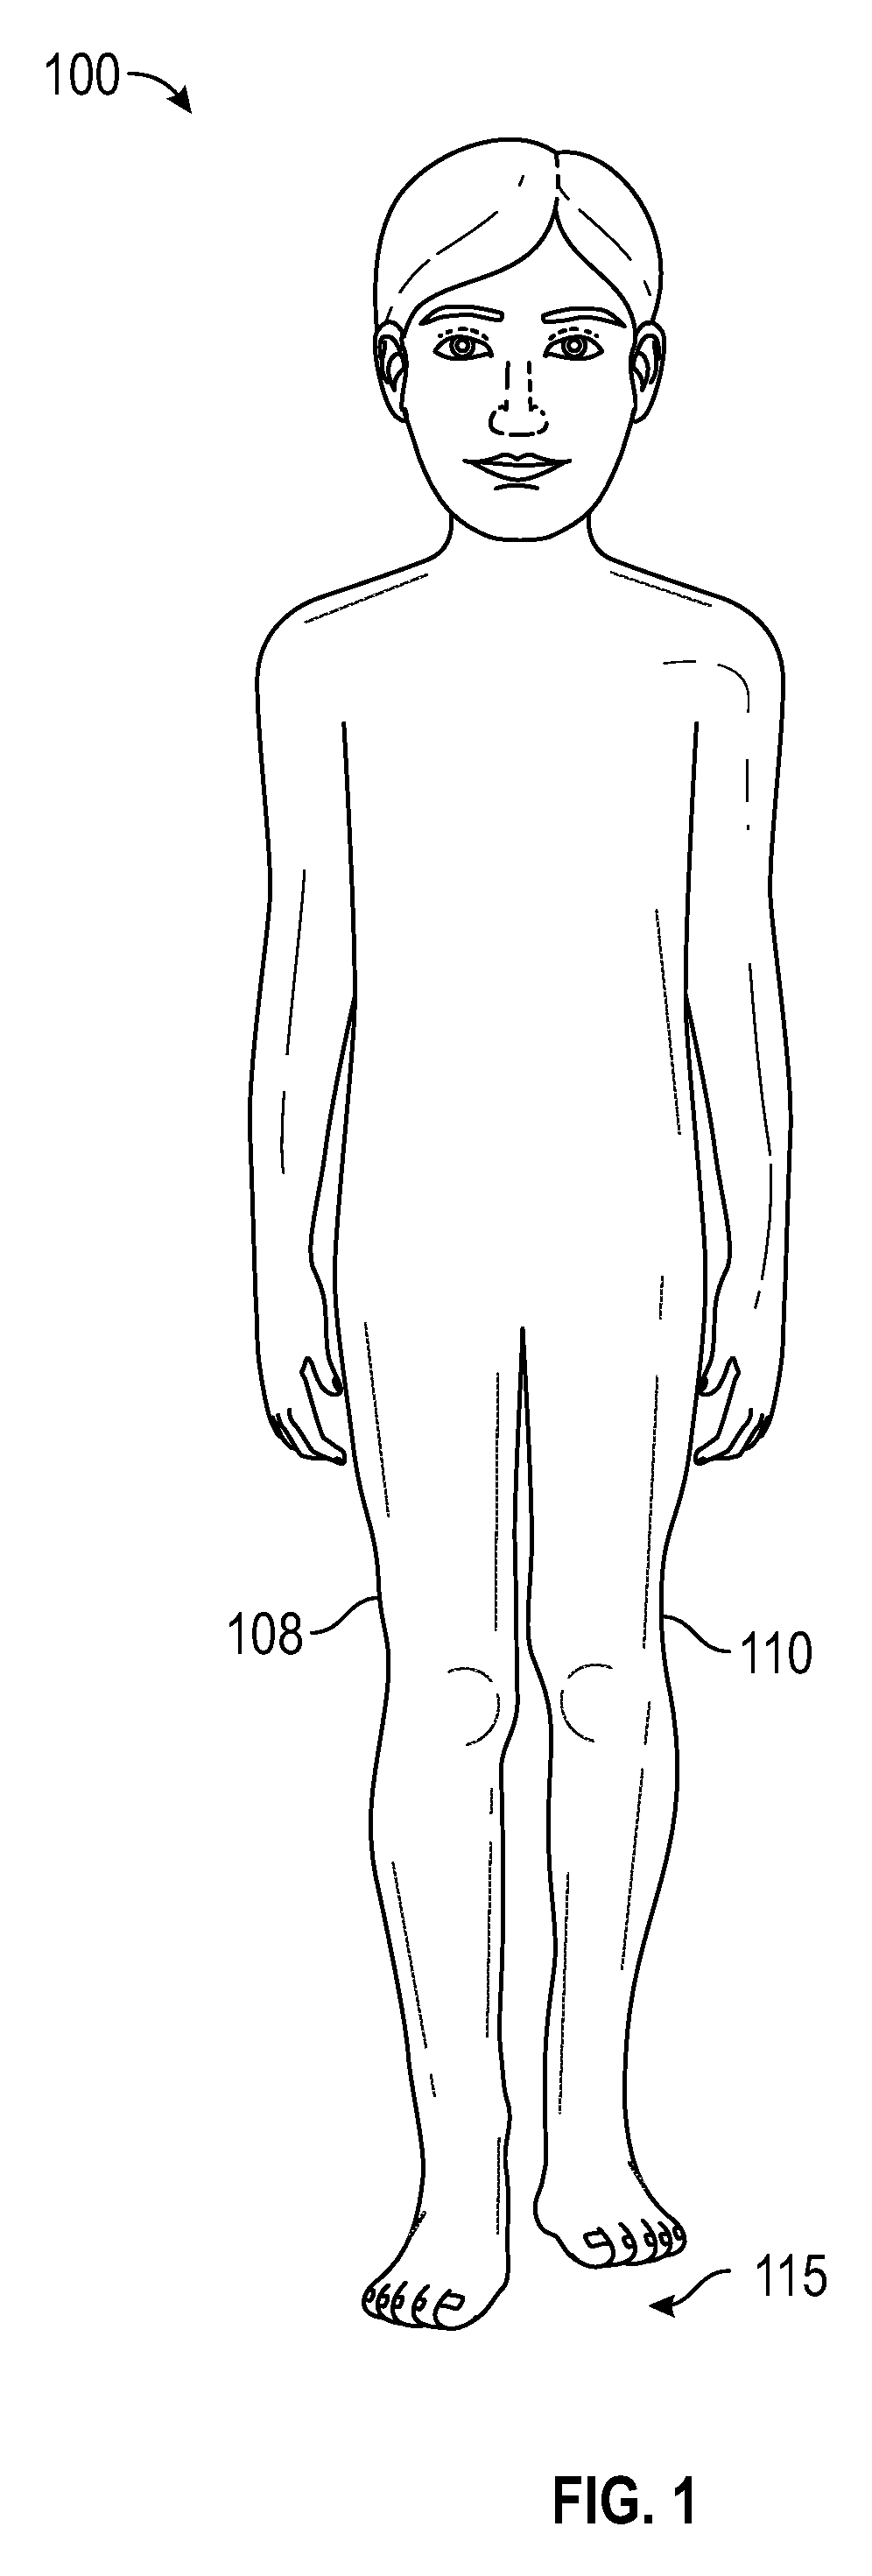 Corrective footwear for leg length discrepancy